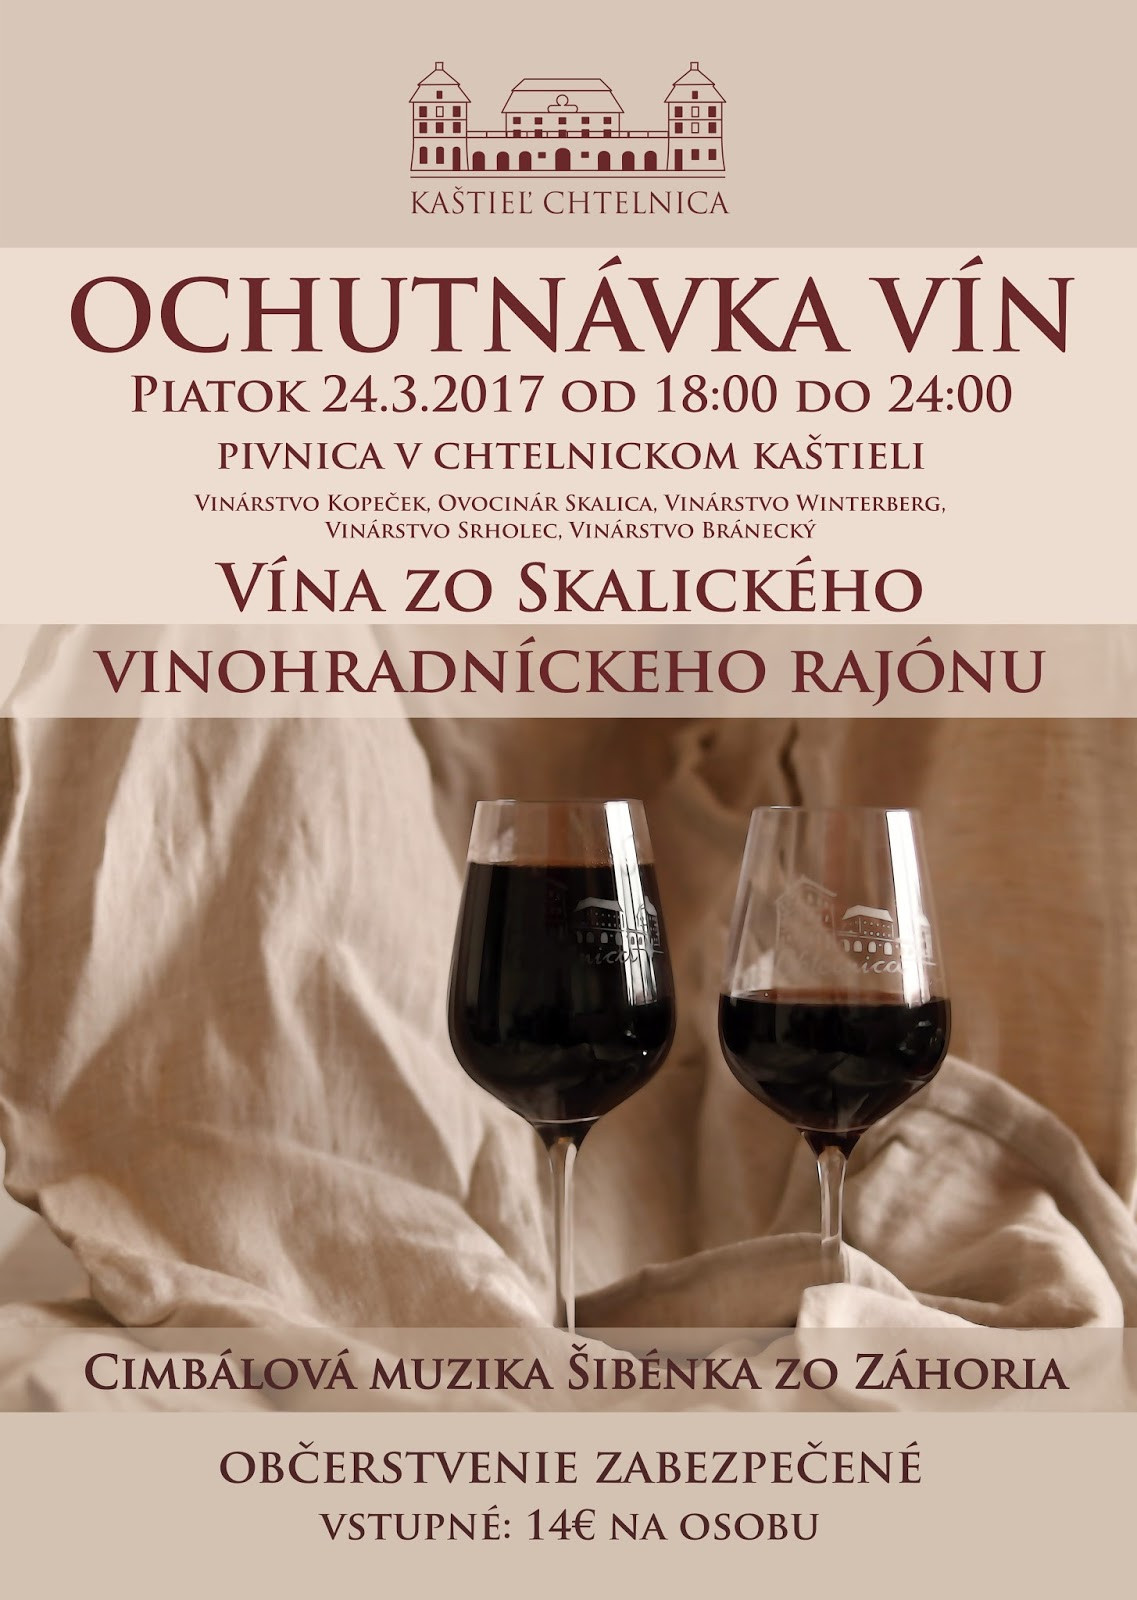 Ochutnávka vín v Chtelnickom kaštieli (24.3.2017)